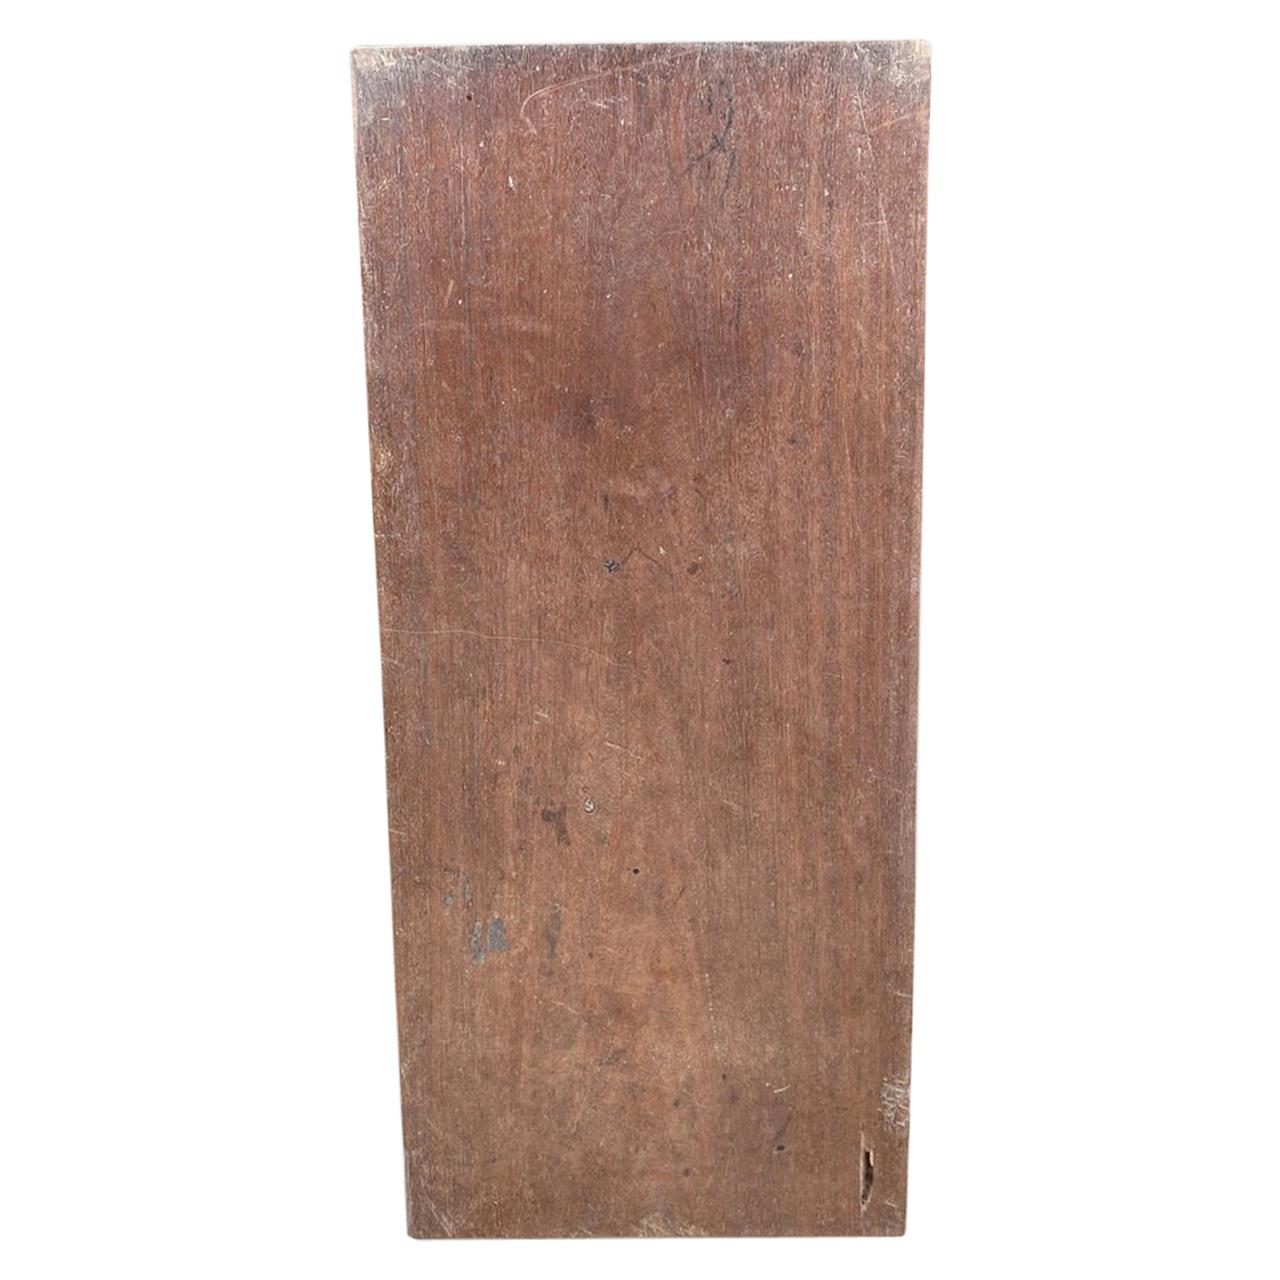 Andrianna Shamaris Nias Wood Single Panel For Sale